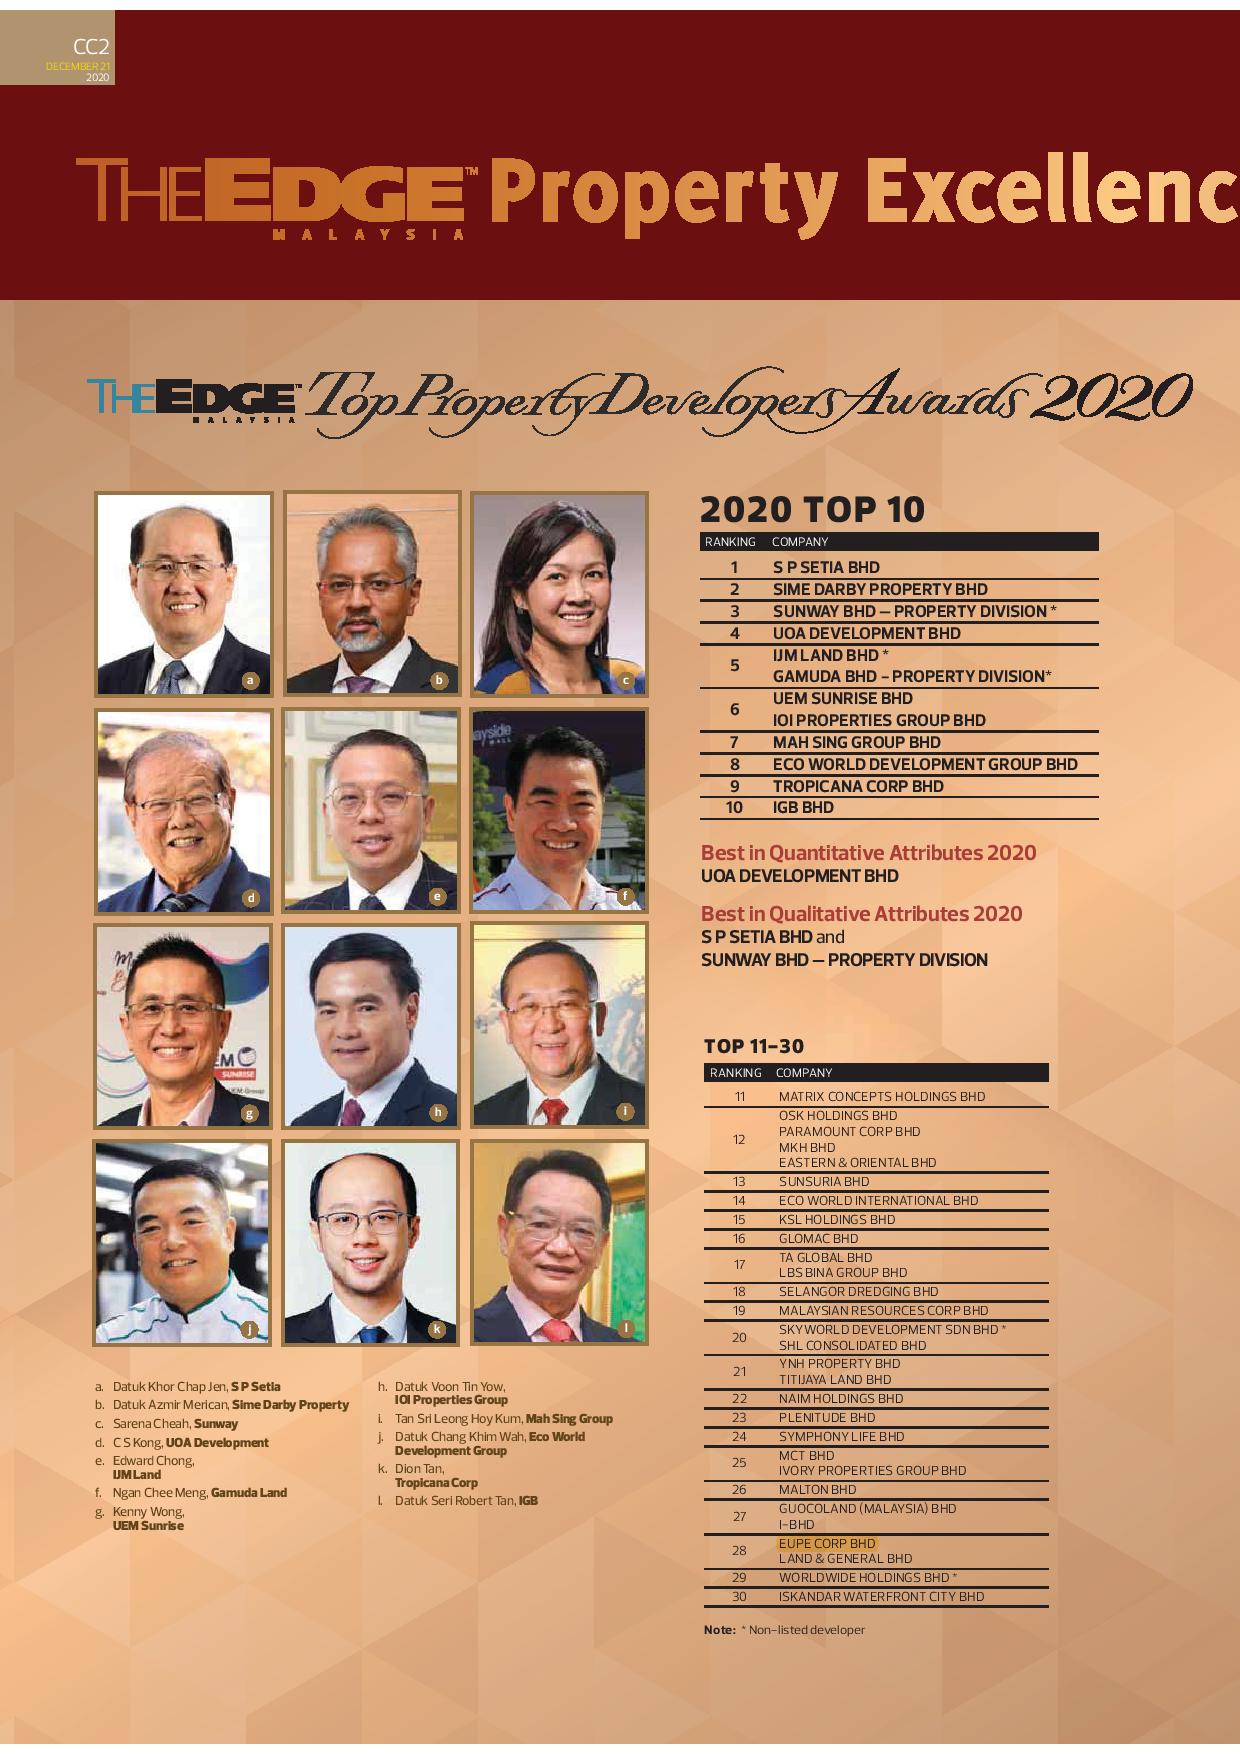 The Edge : The Edge Malaysia Property Excellence Awards (TEPEA) 2020